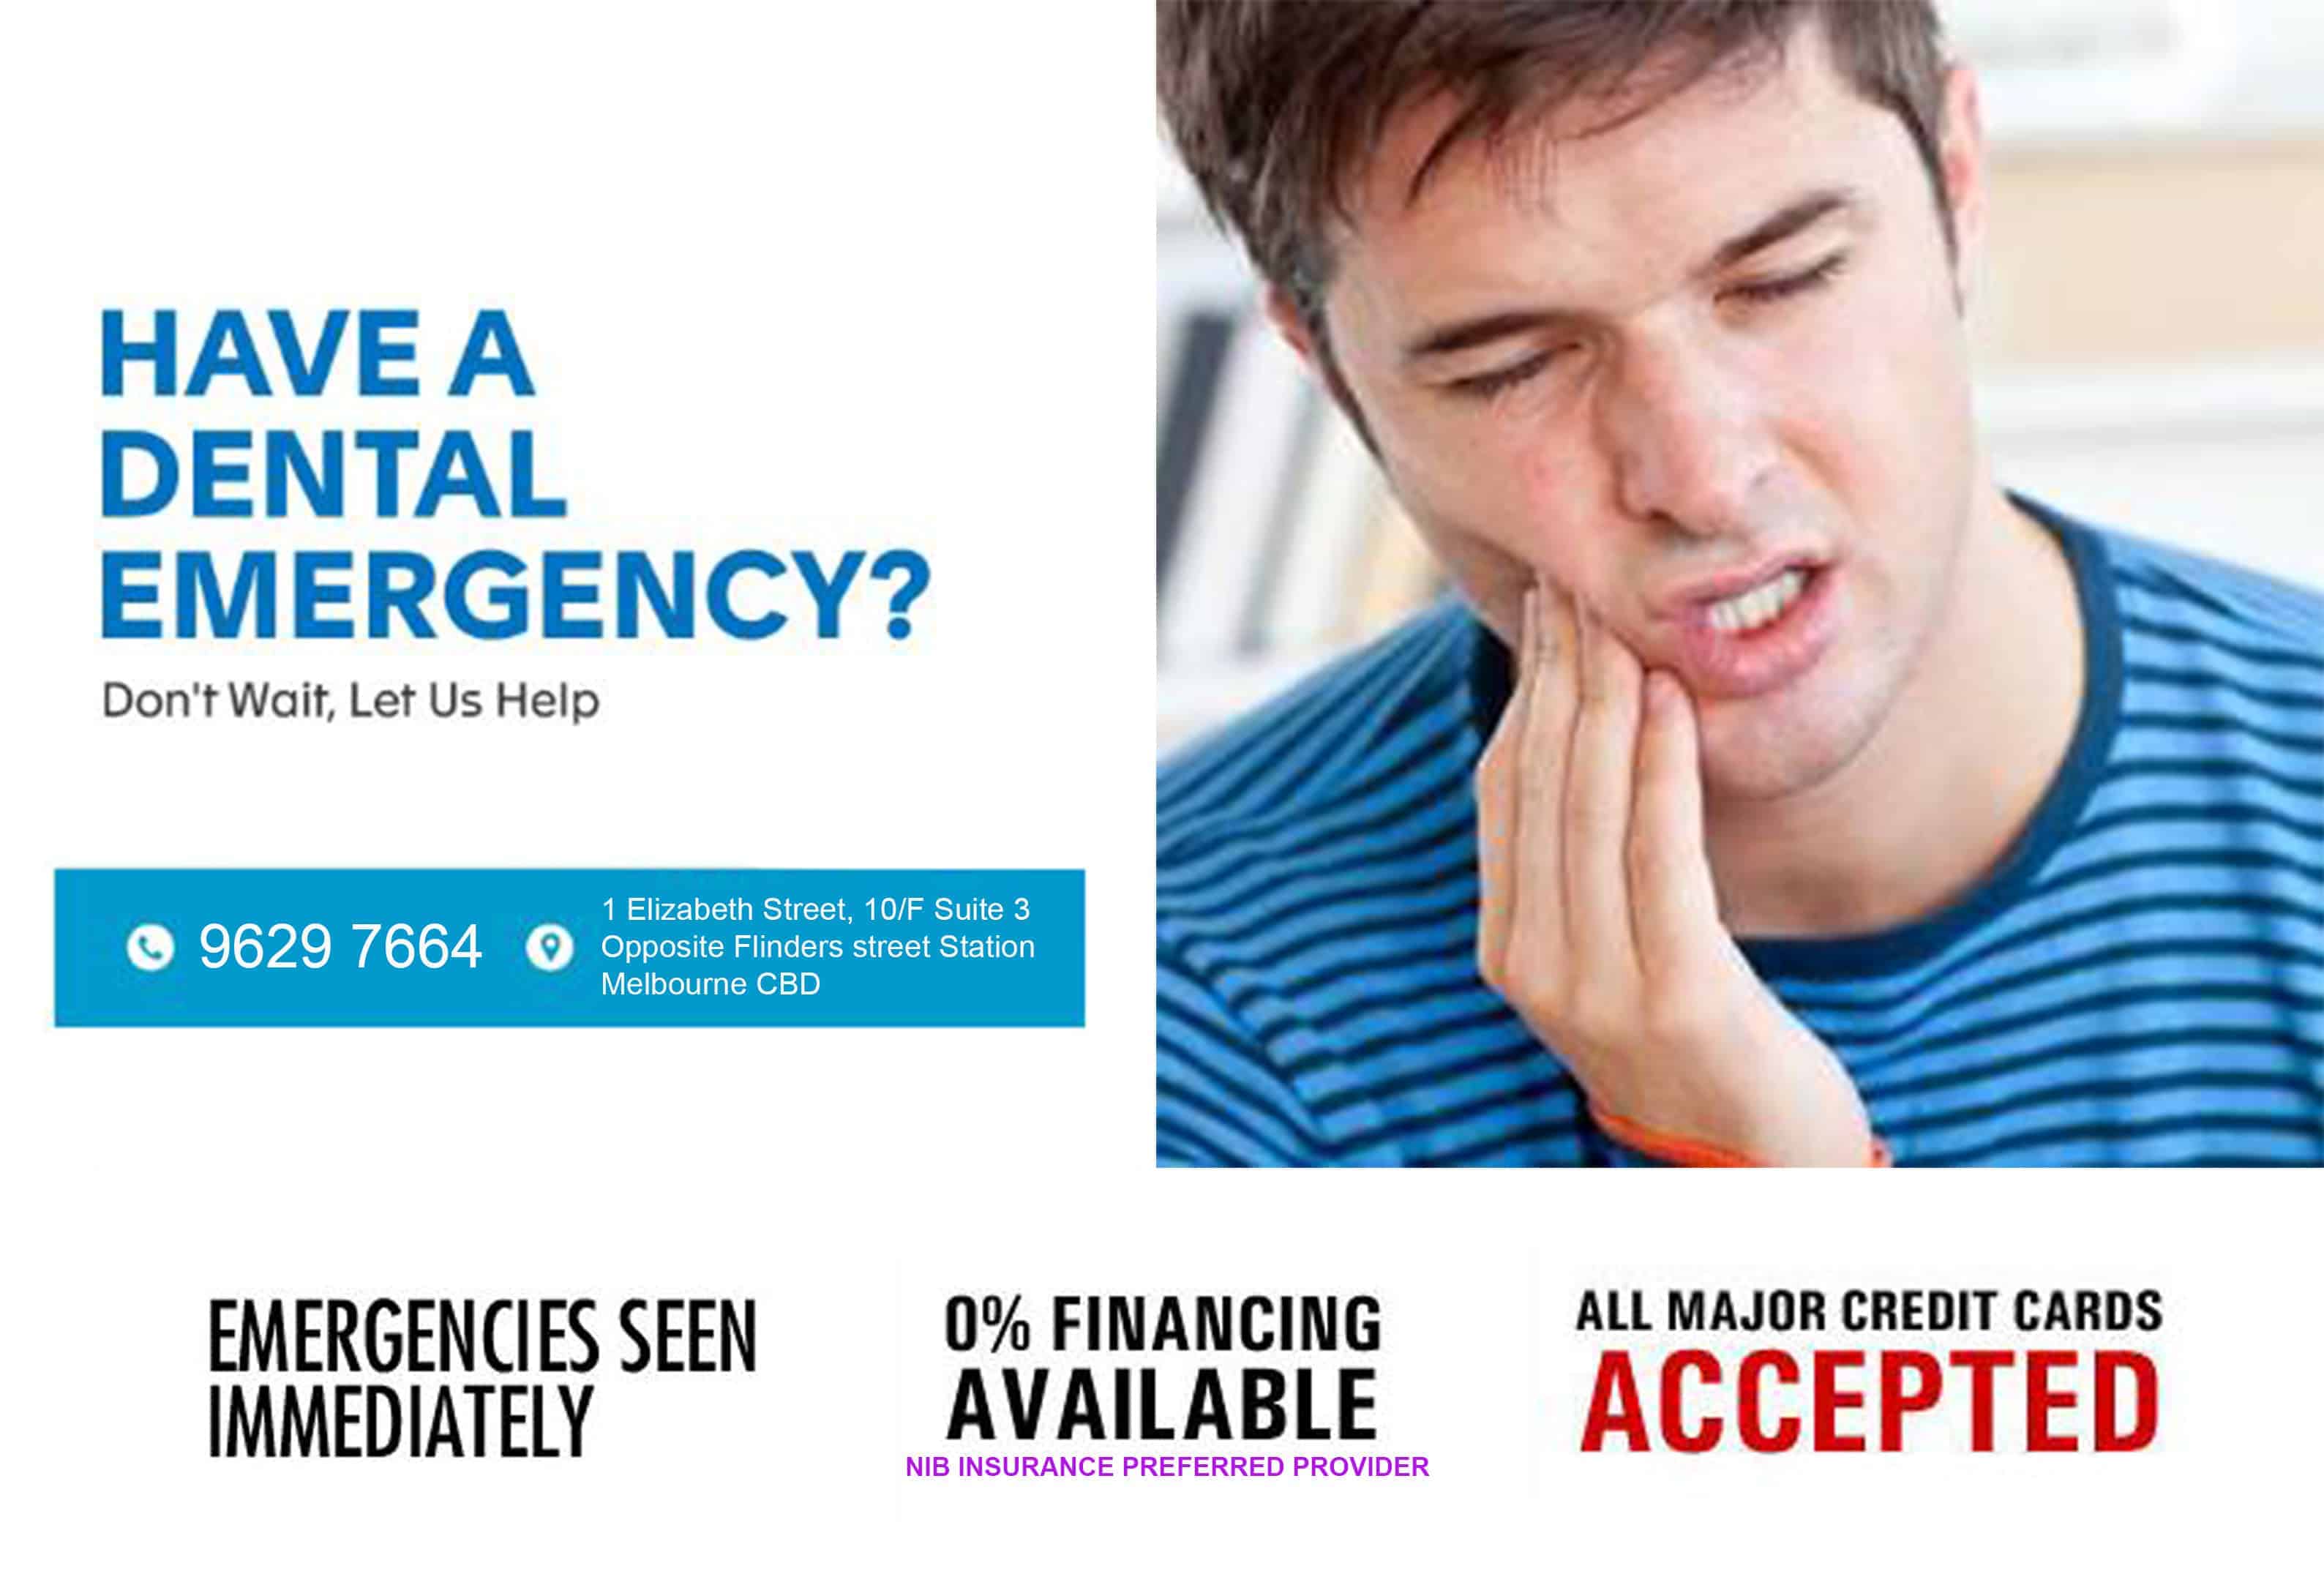 Emergency Dentist Melbourne CBD - EMERGENCY DENTAL CARE